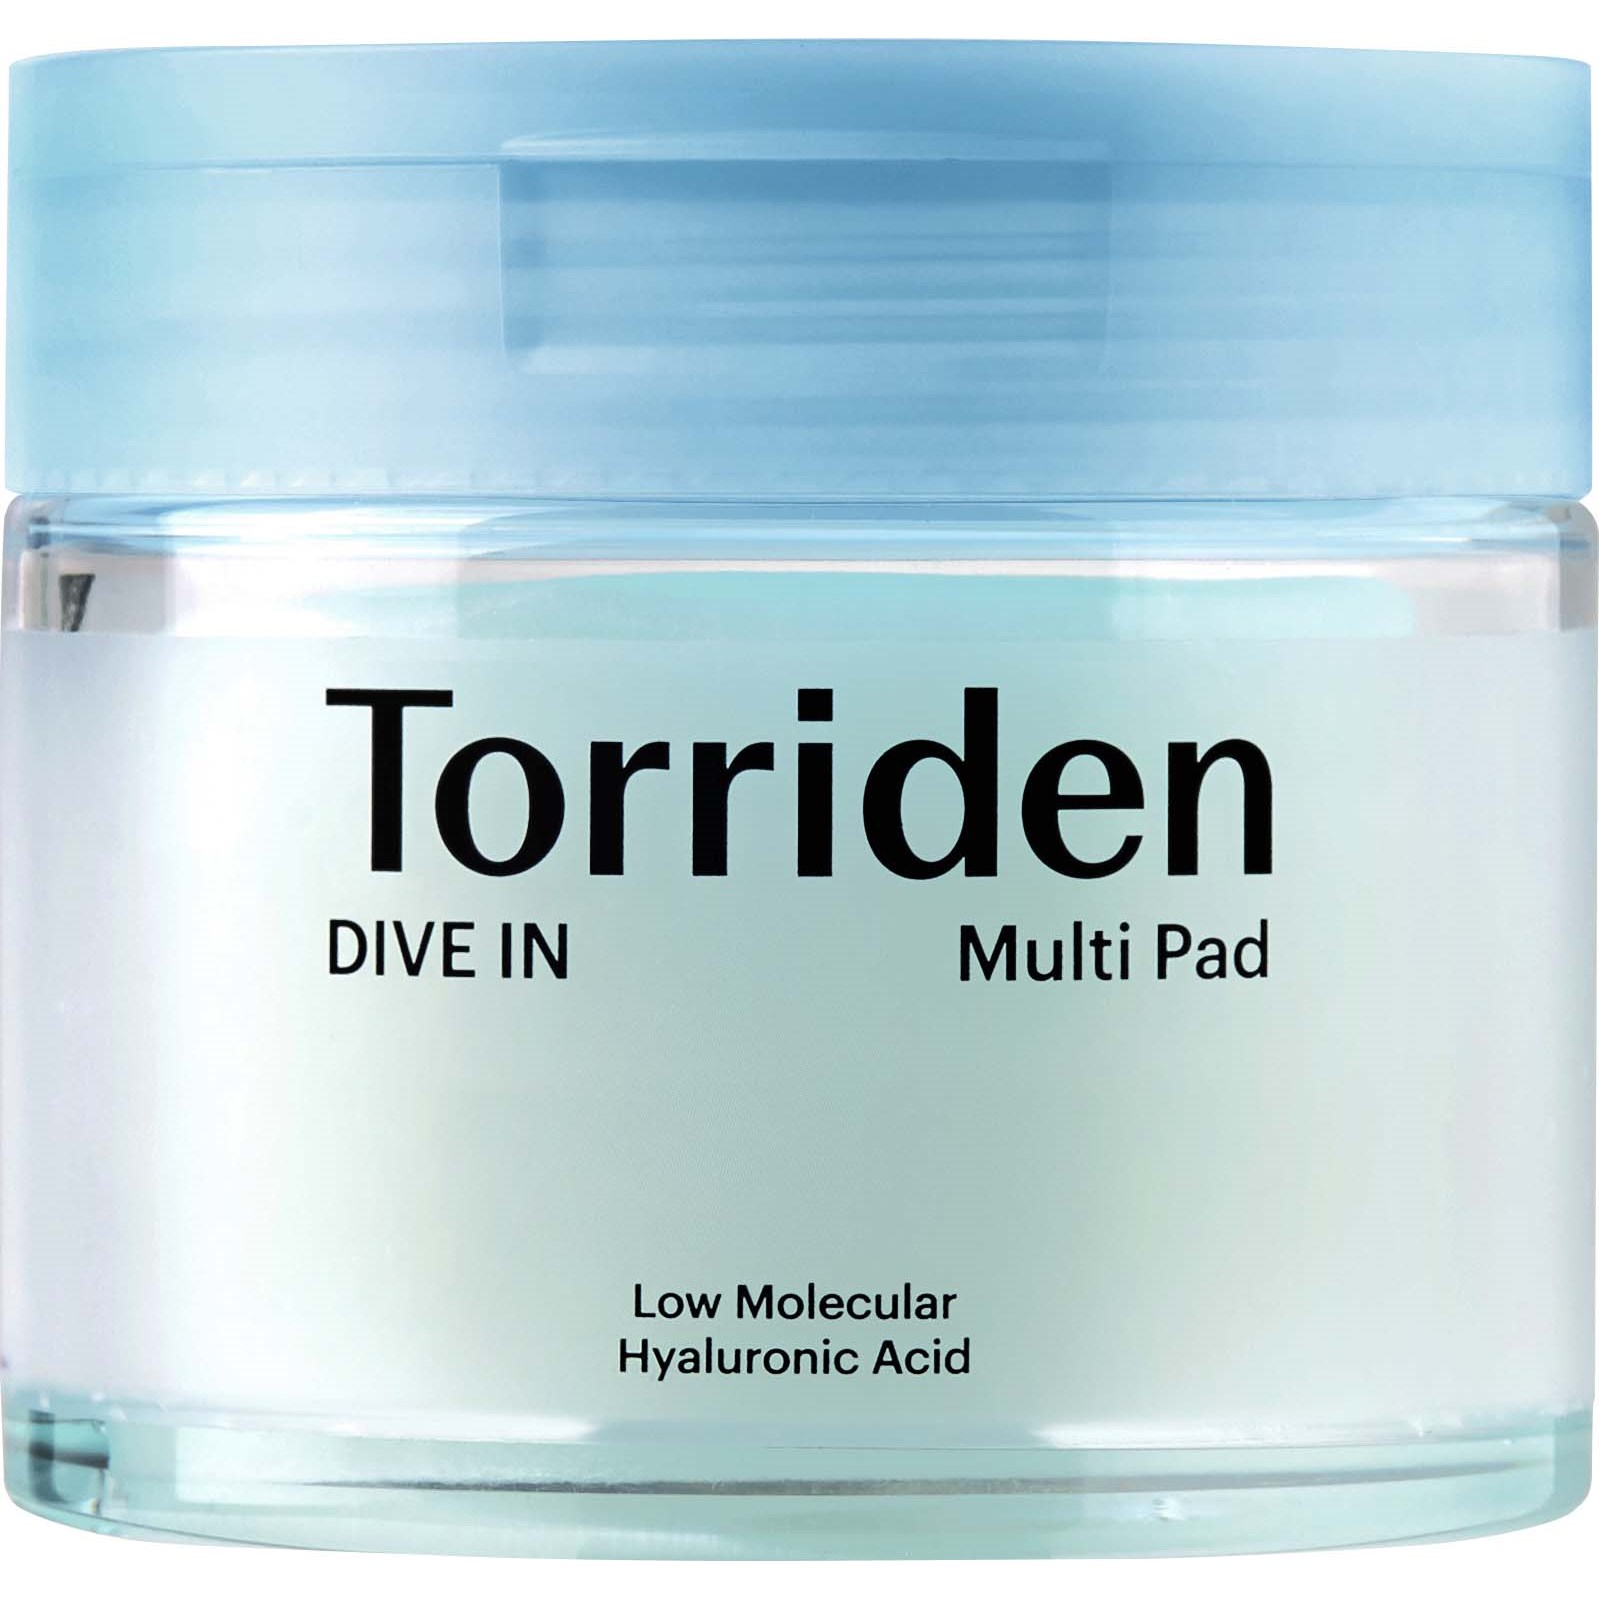 Torriden DIVE IN Low Molecular Hyaluronic Acid Multi Pad 80 st